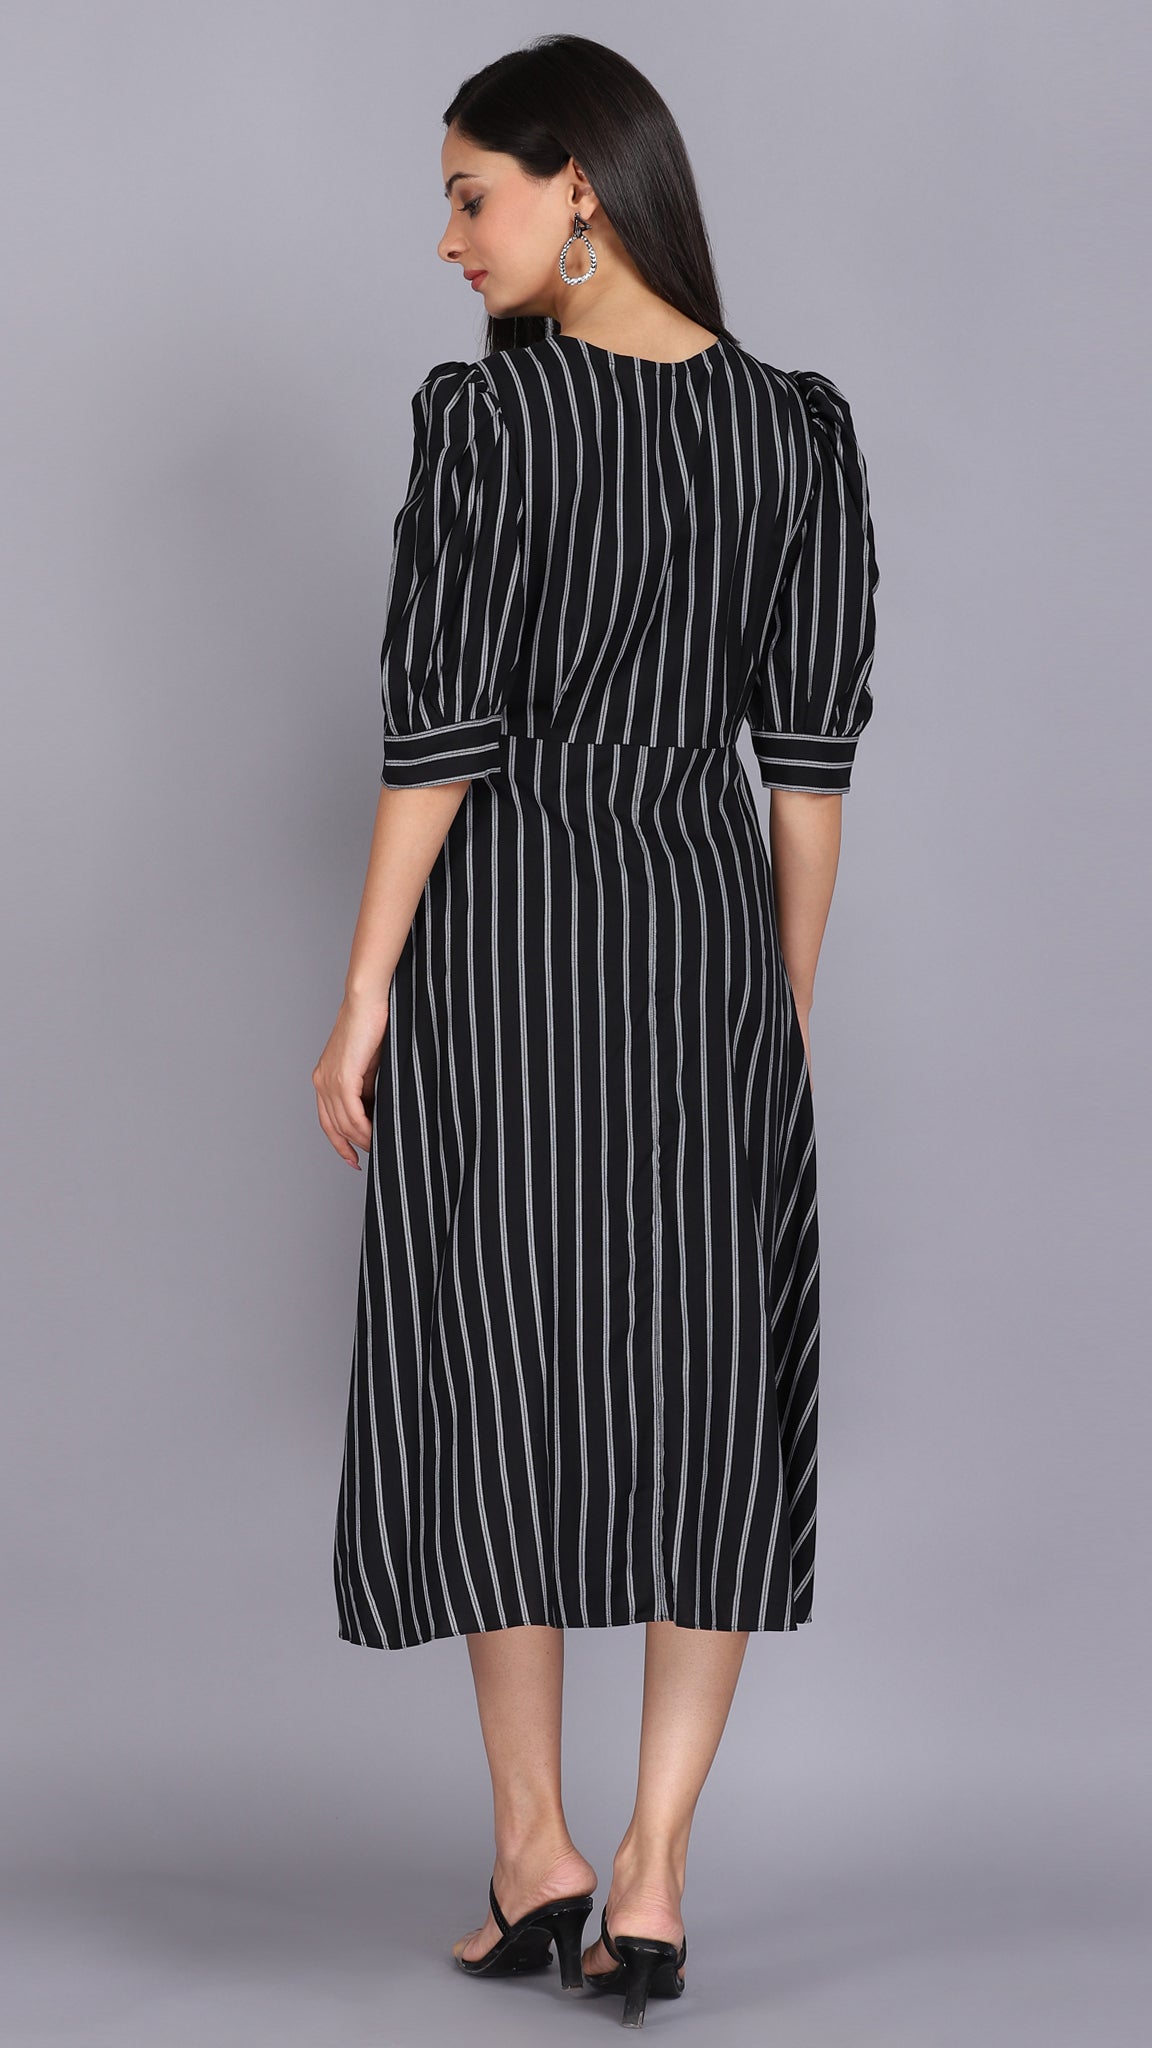 Black stripe cross over dress